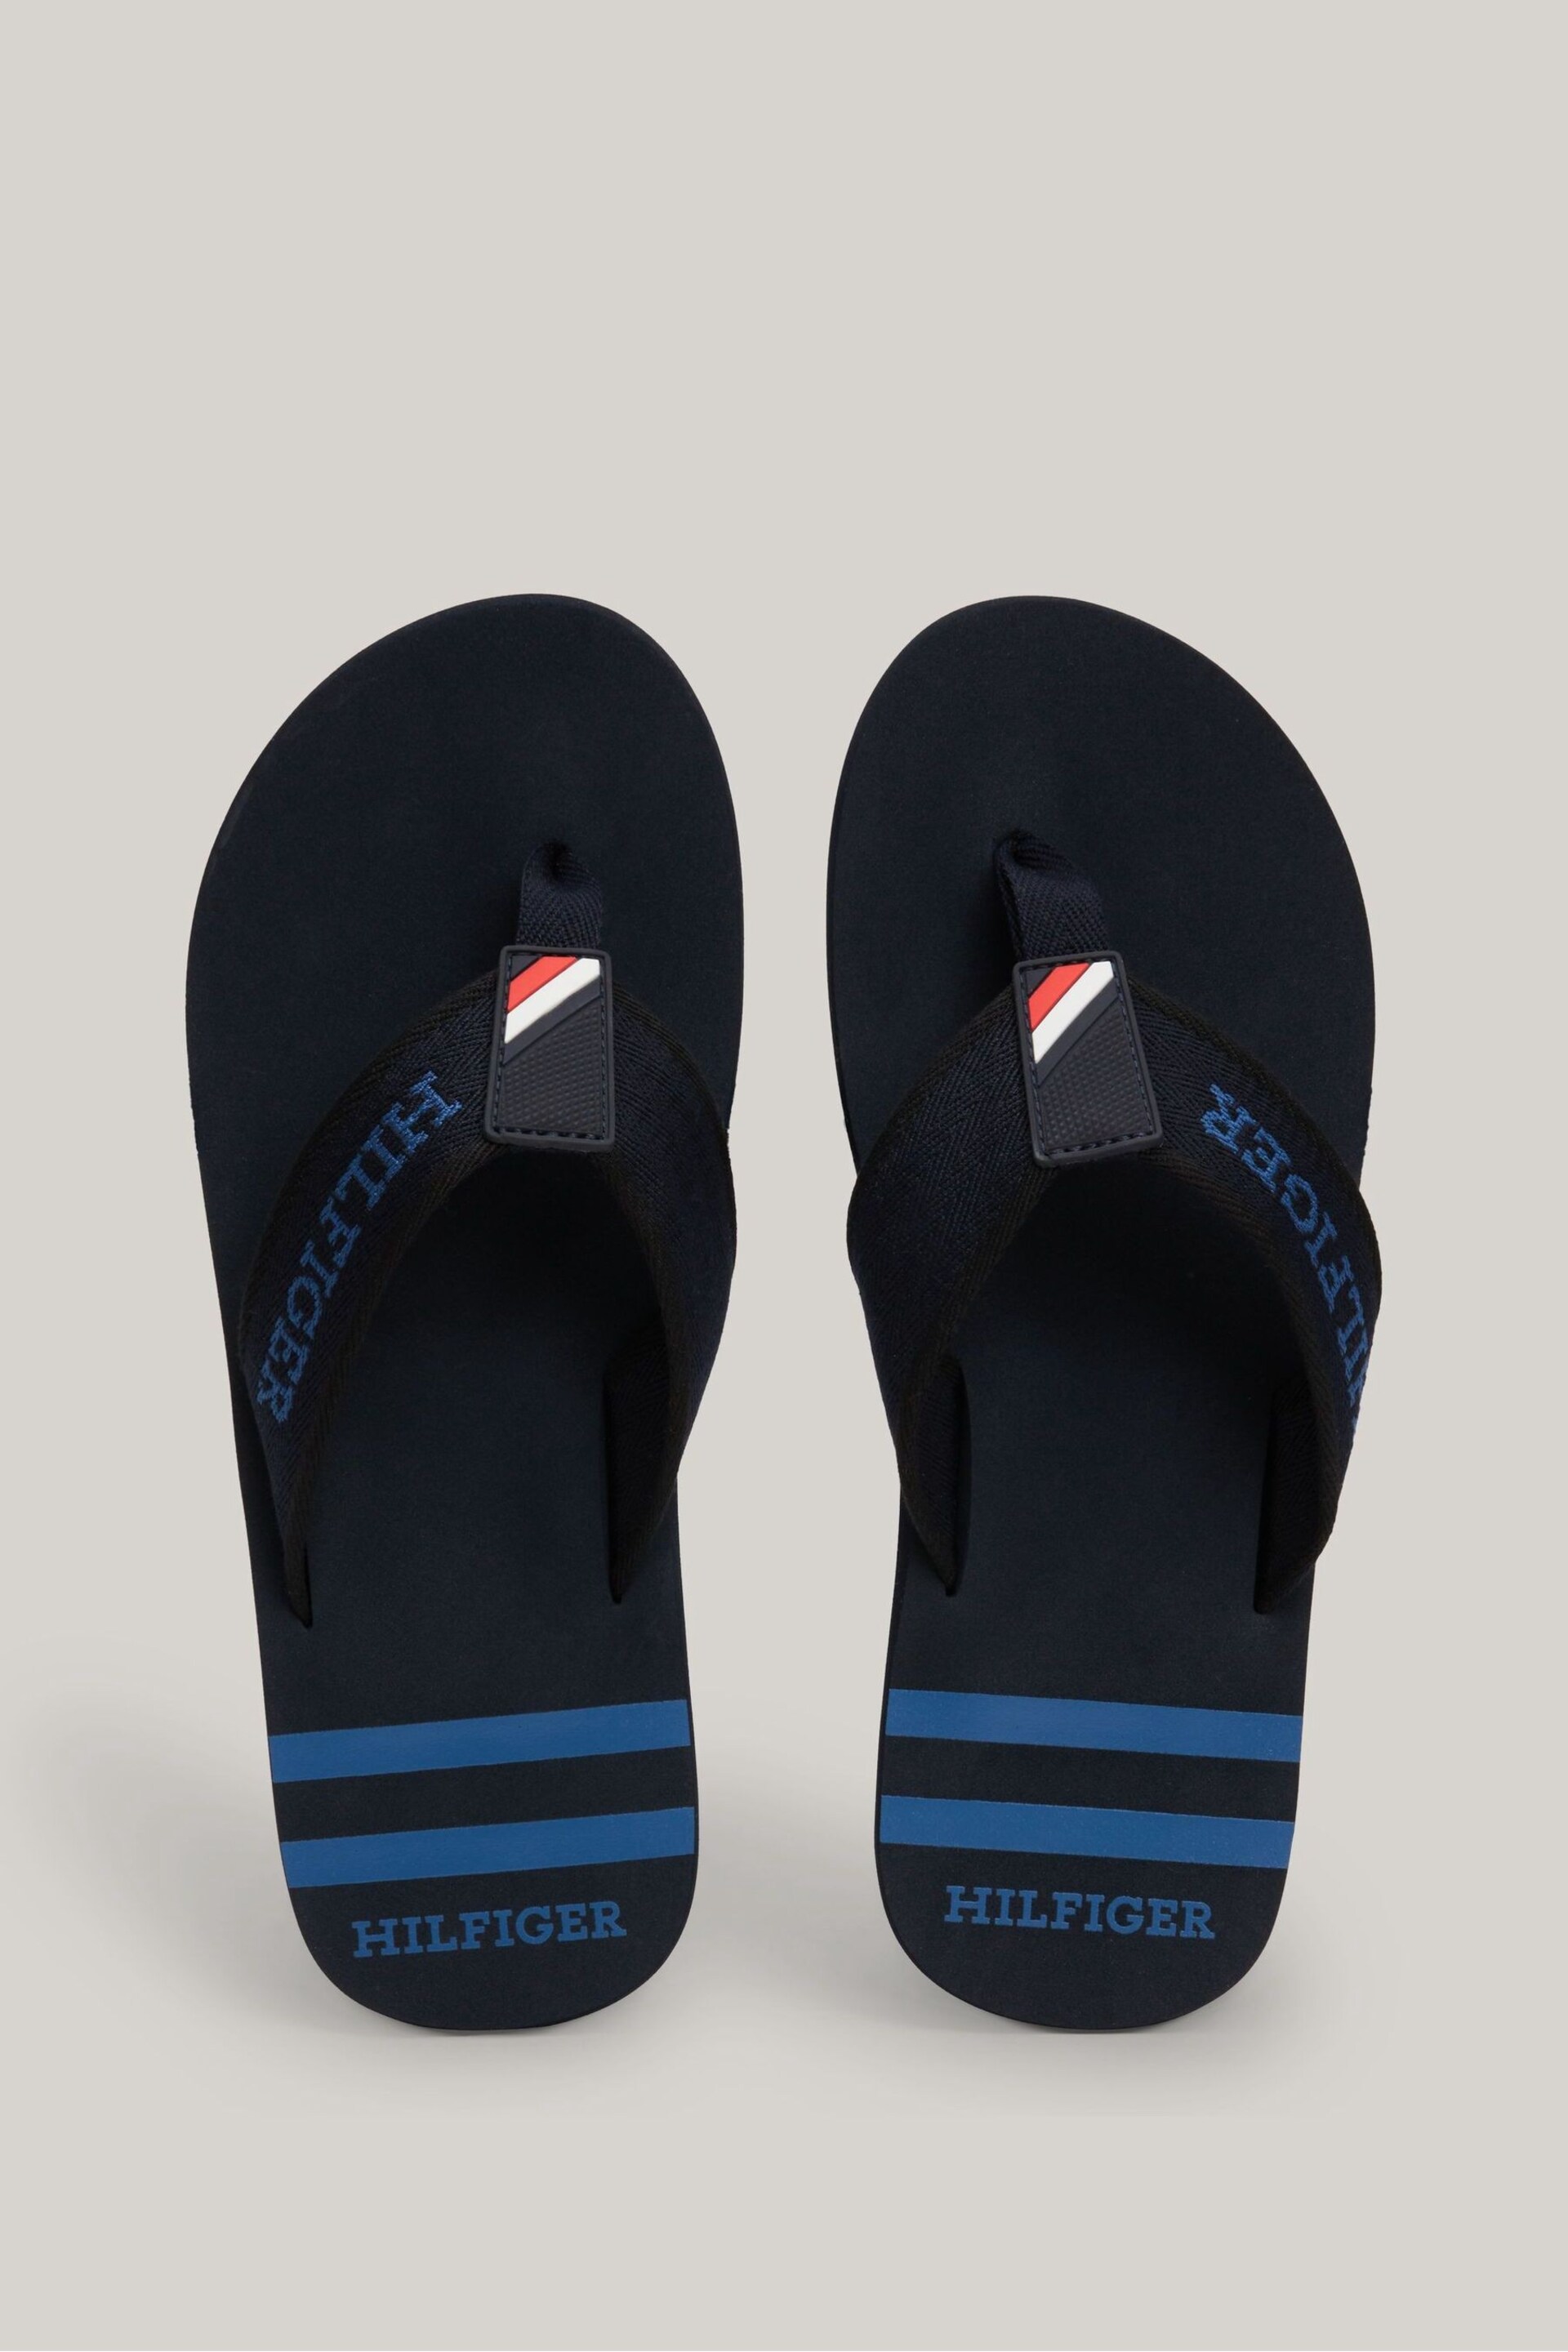 Tommy Hilfiger Blue Sporty Hilfiger Beach Sandals - Image 4 of 6